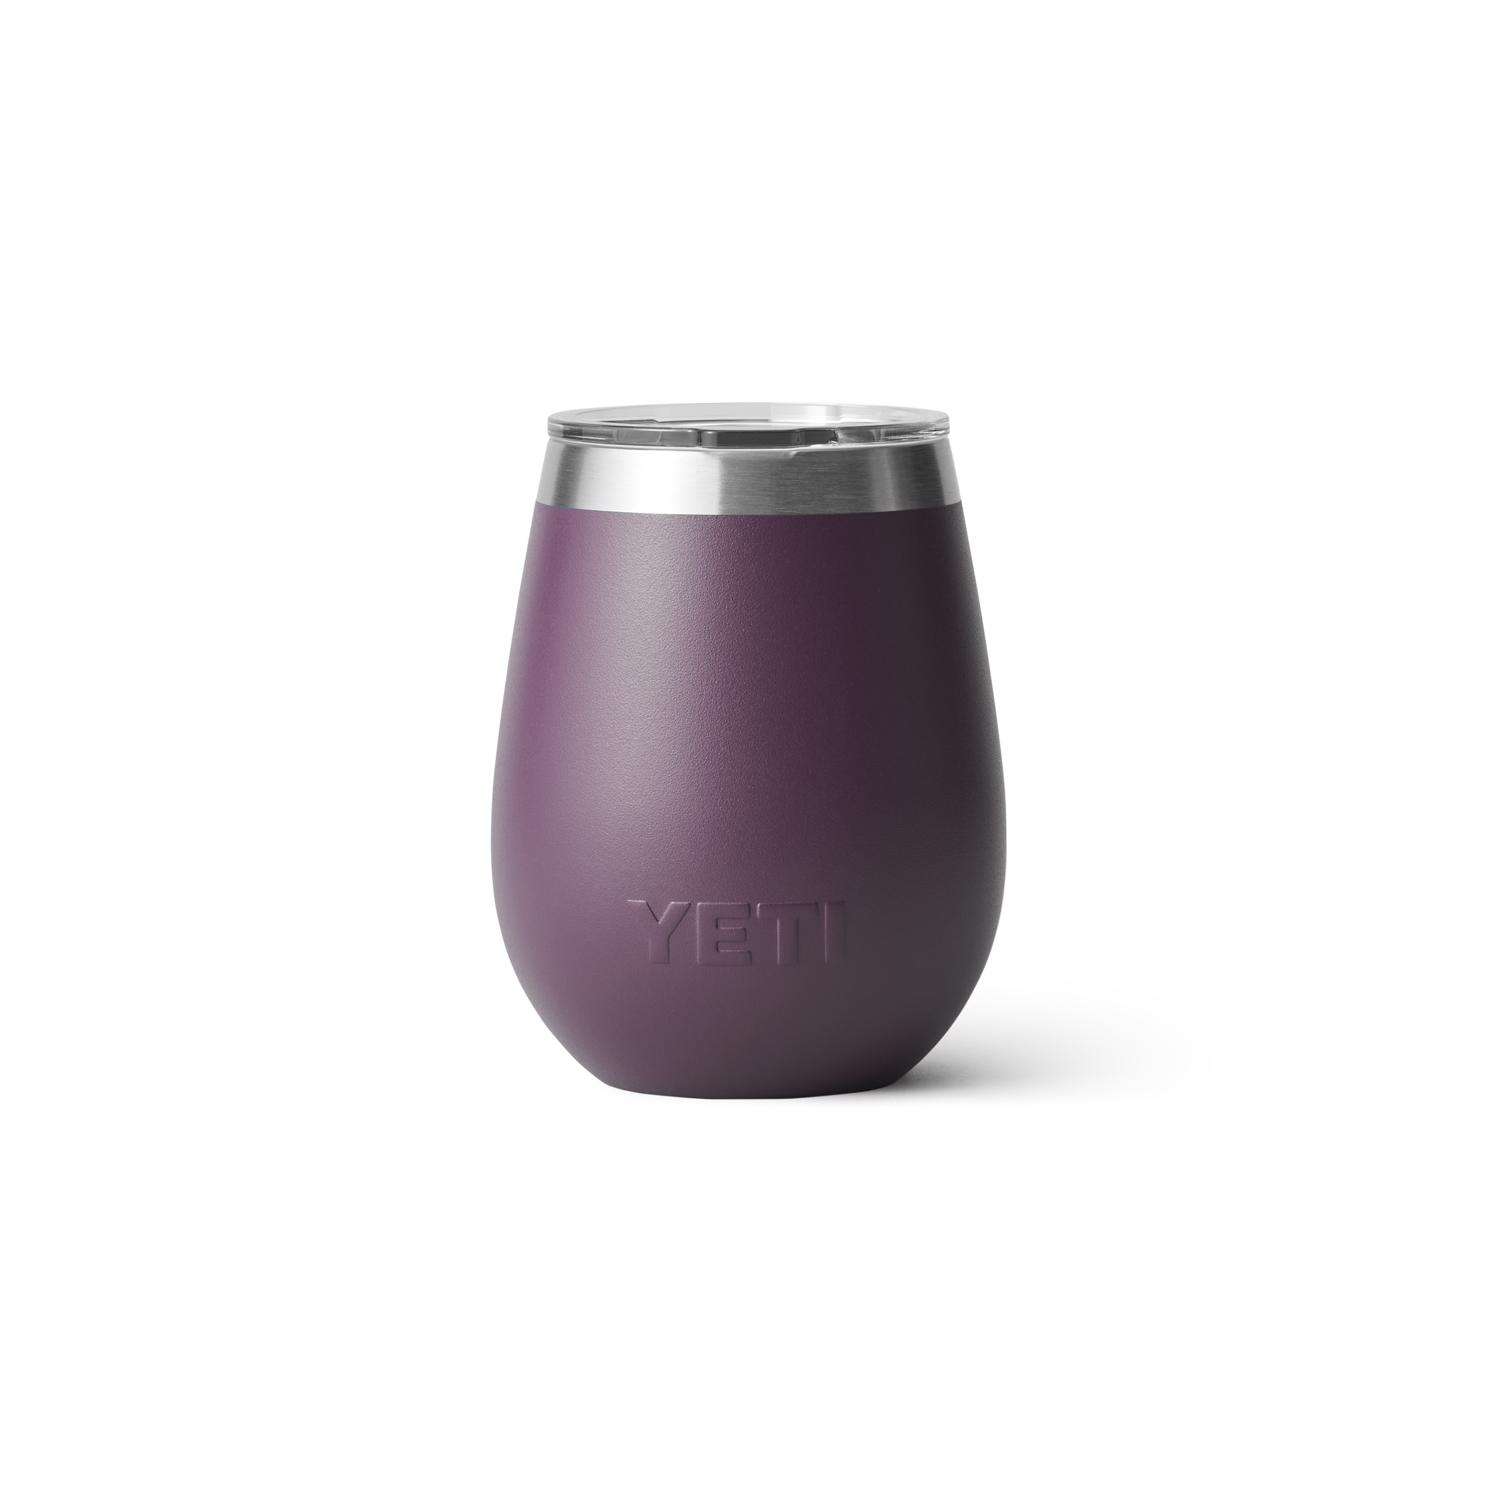 The Corner On Main - The new Peak Purple YETI collection has